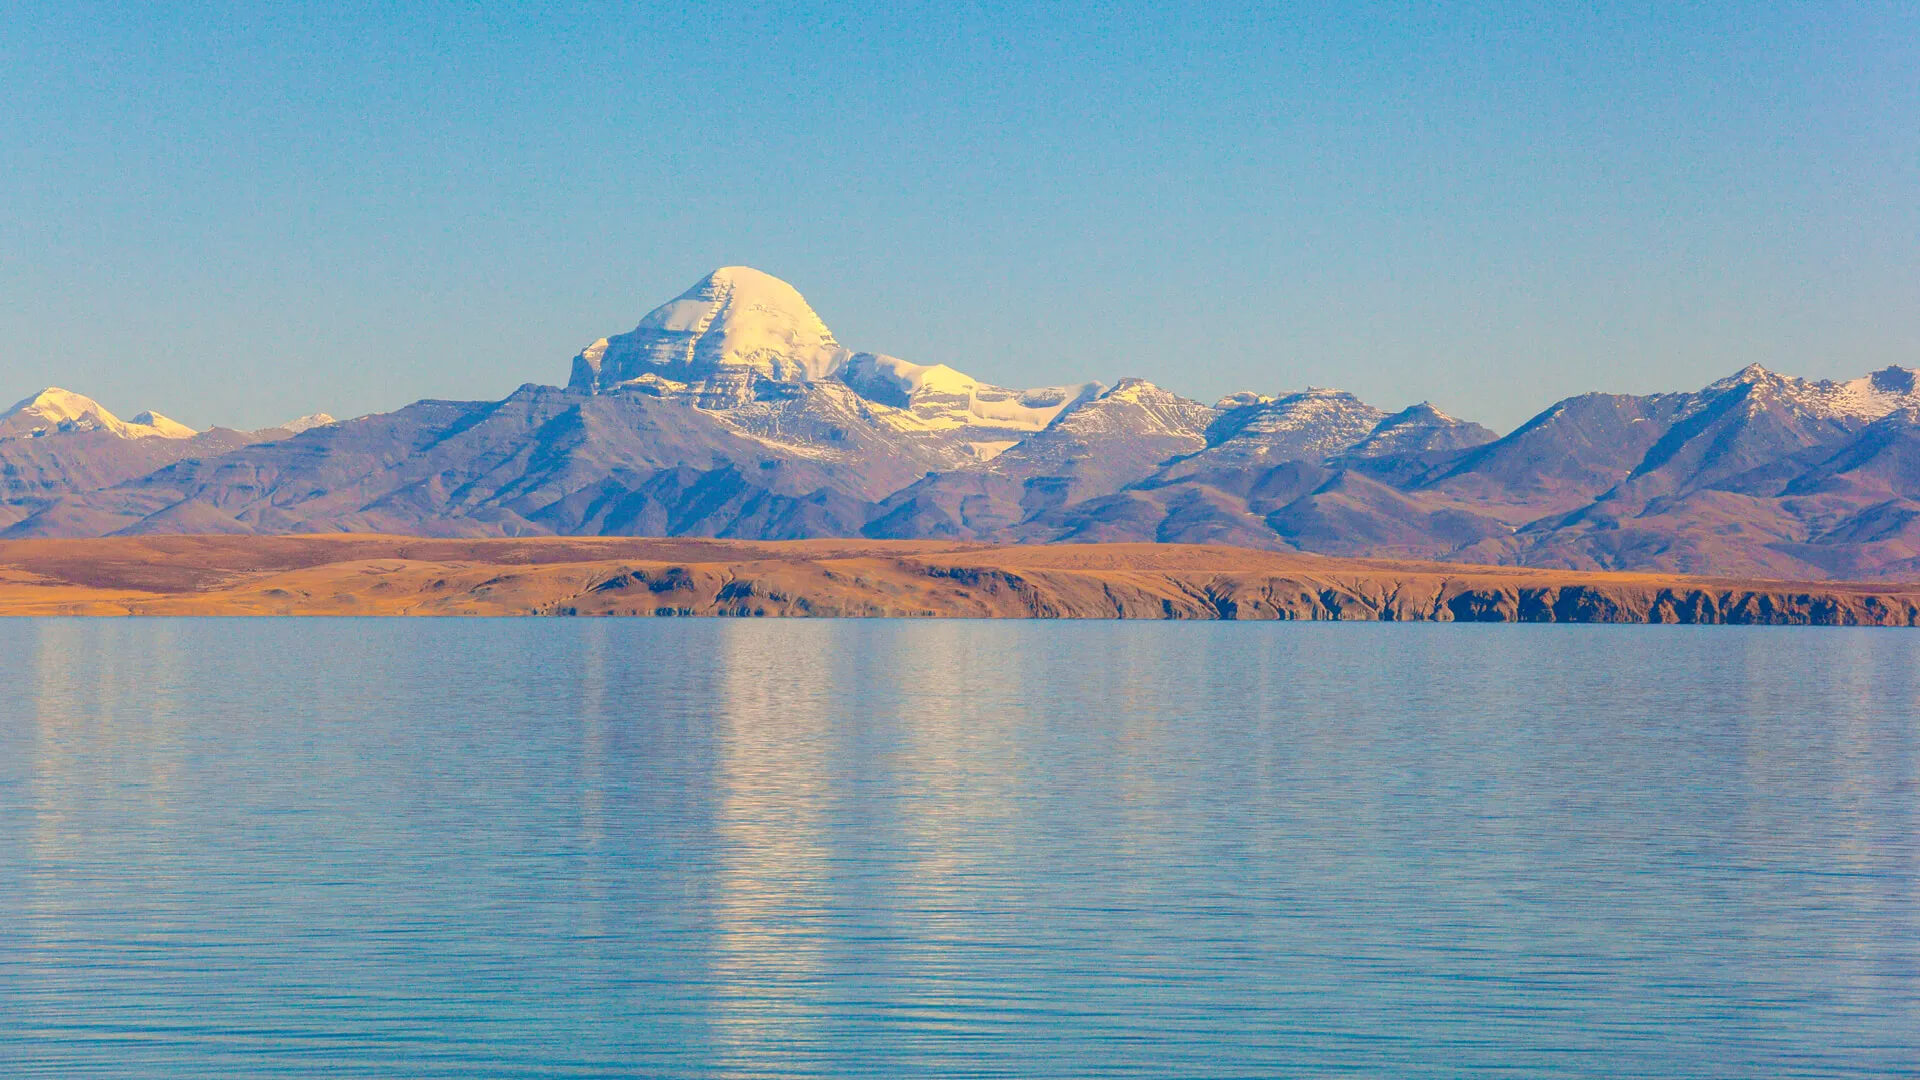 Kailash Mansarovar Yatra - Exploring the Sacred Trek - Tips for a Safe Journey